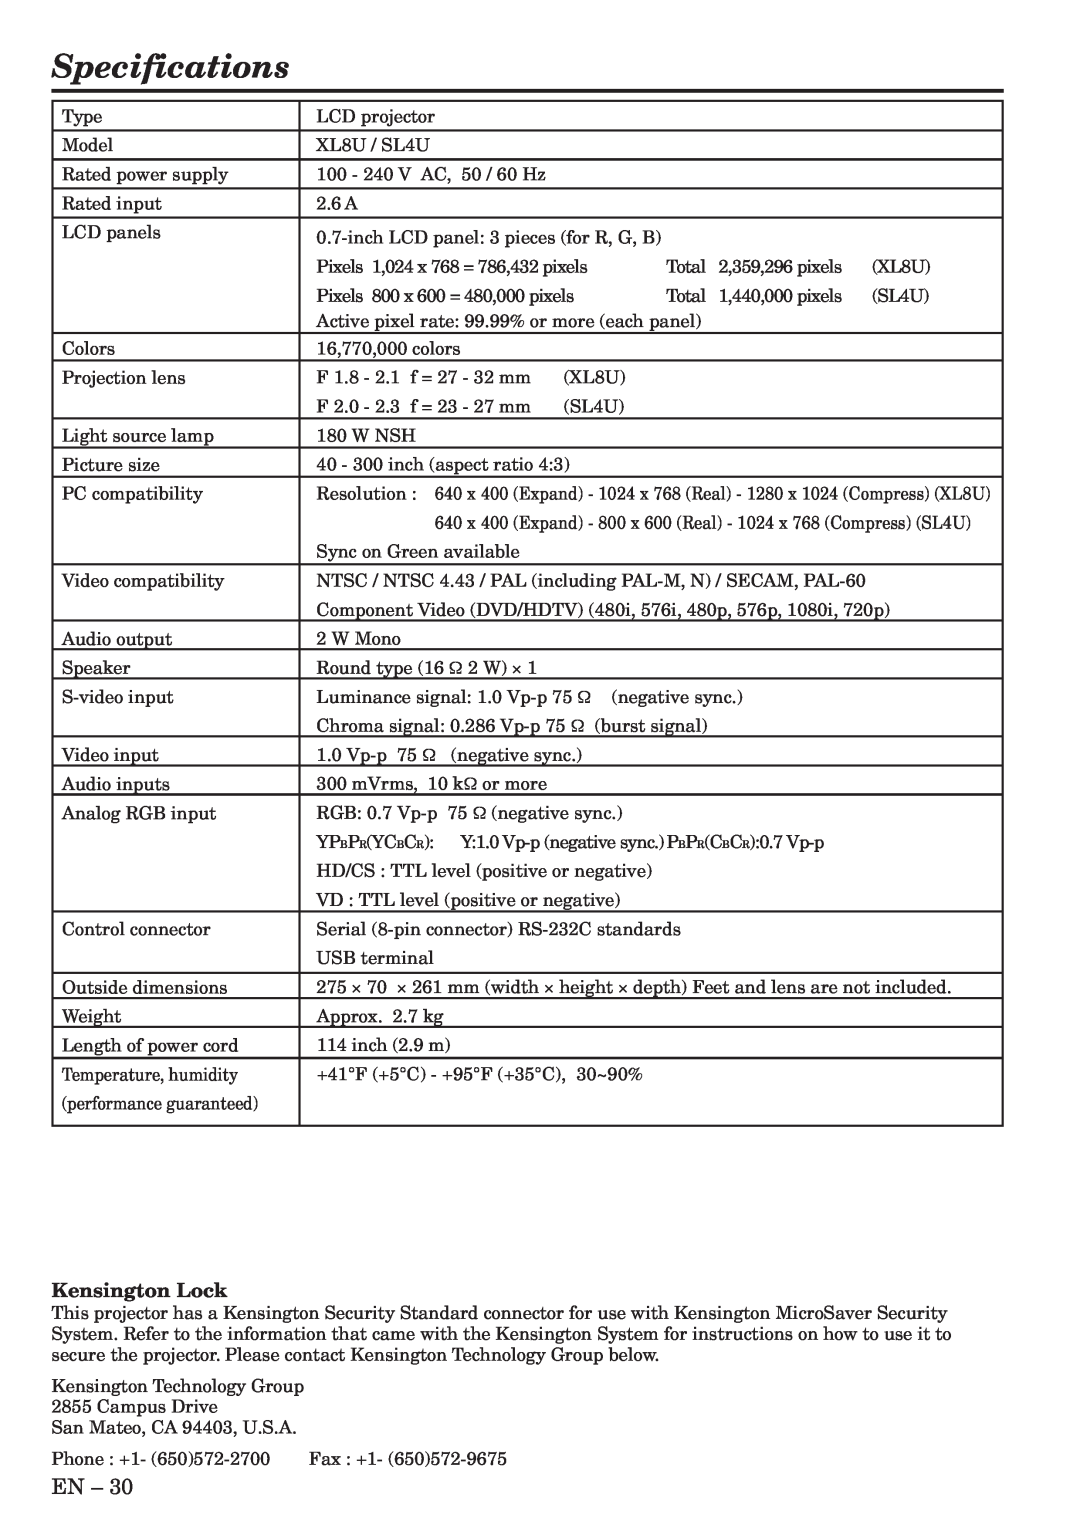 Mitsubishi Electronics XL8U, SL4U user manual Specifications, Kensington Lock 